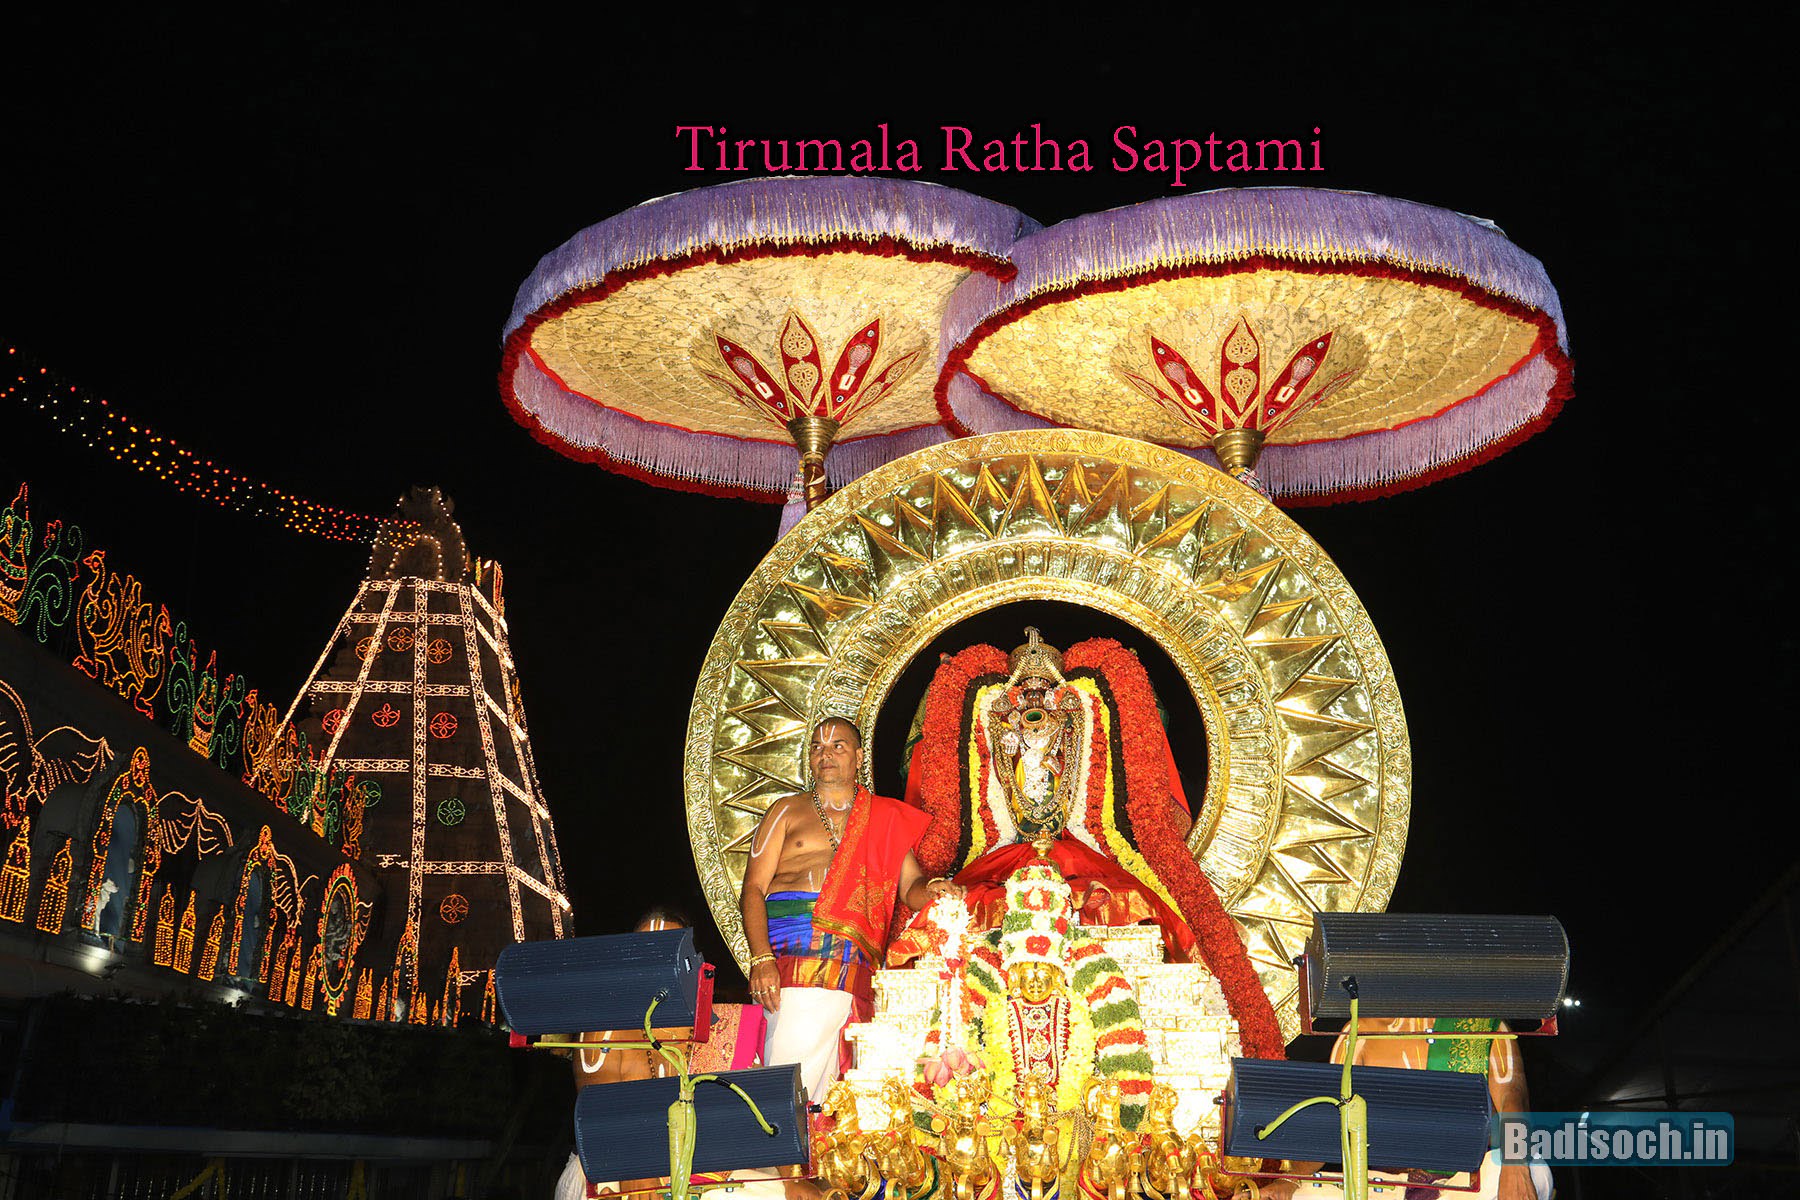 Tirumala Ratha Saptami